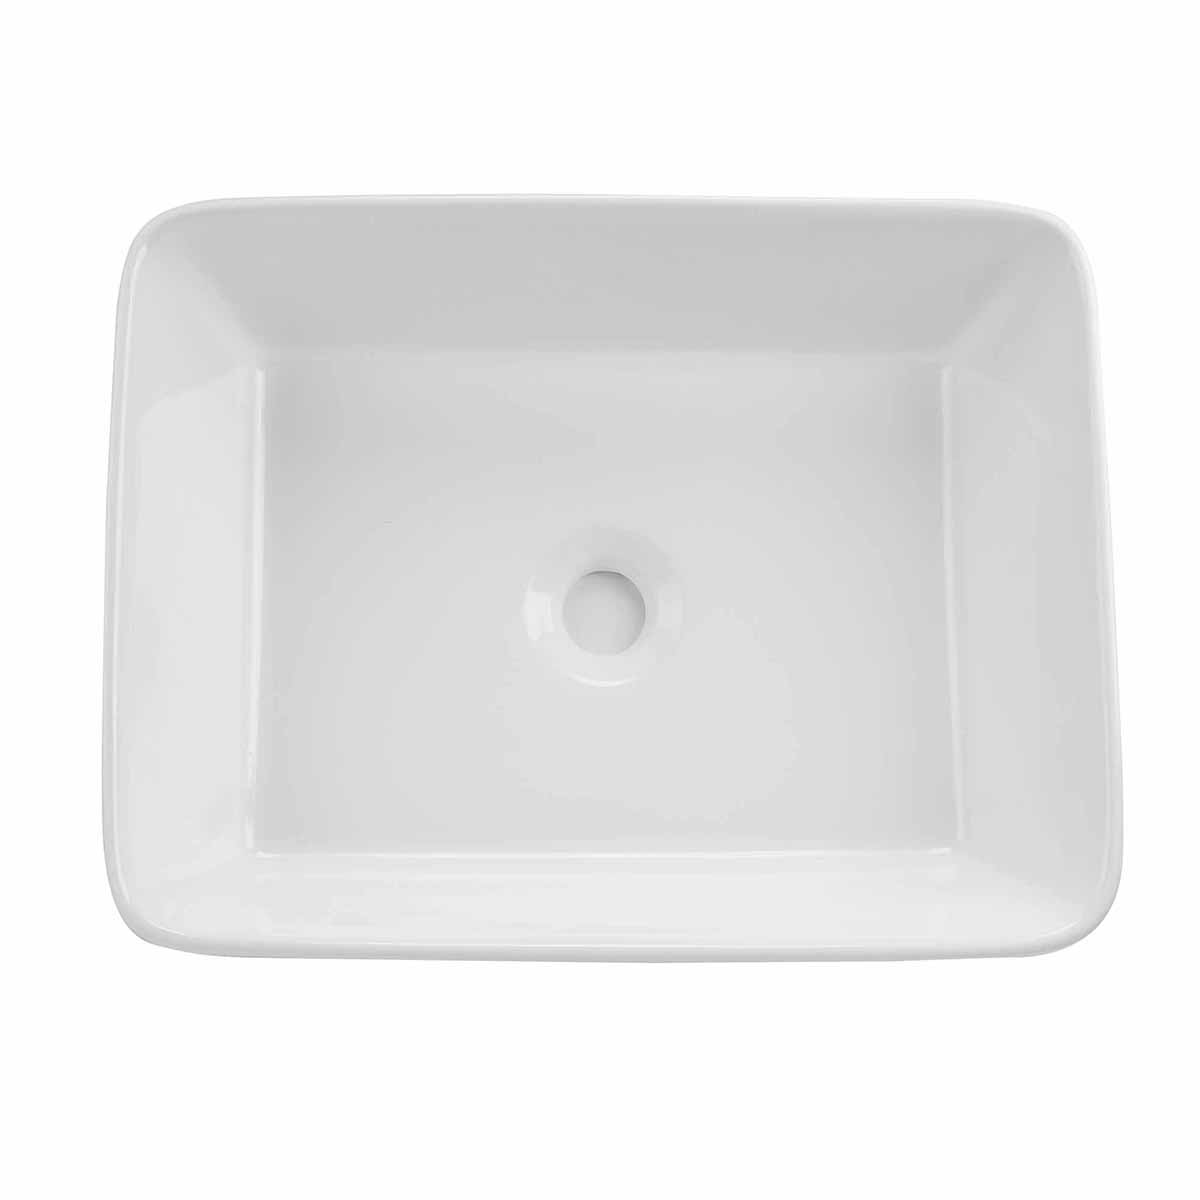 Professional Manufacturing Hotel Ceramic Porcelain Fireclay White Countertop Bathroom Sink / Basin